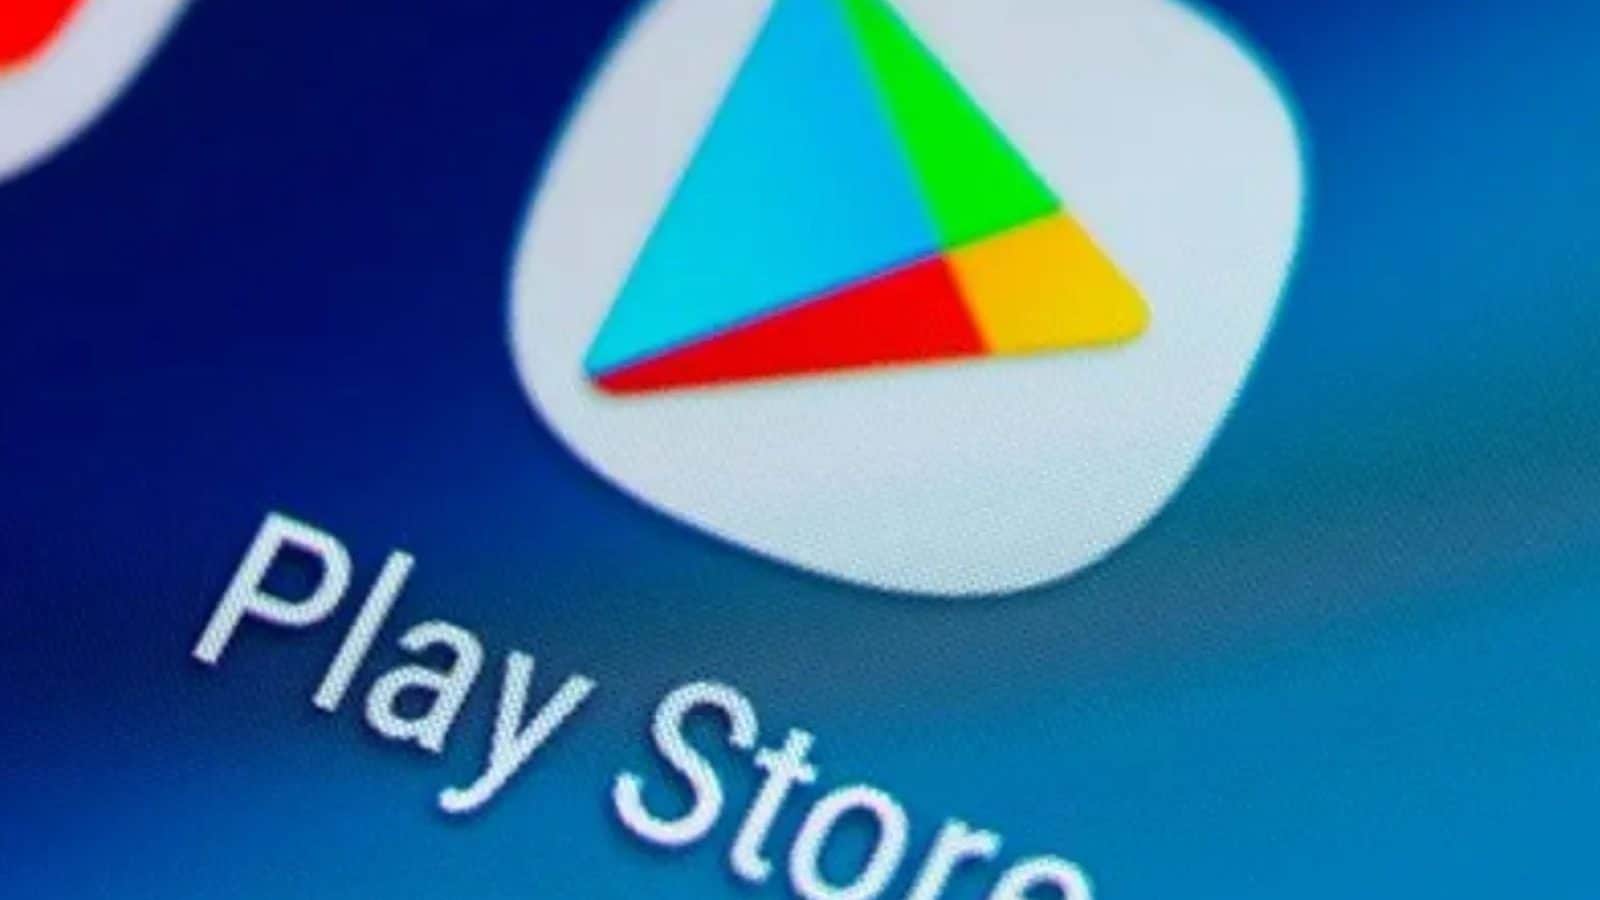 Play Store-এর ১০ বছর! Google তৈরি করল সেরা ১০টি ভারতীয় অ্যাপের তালিকা